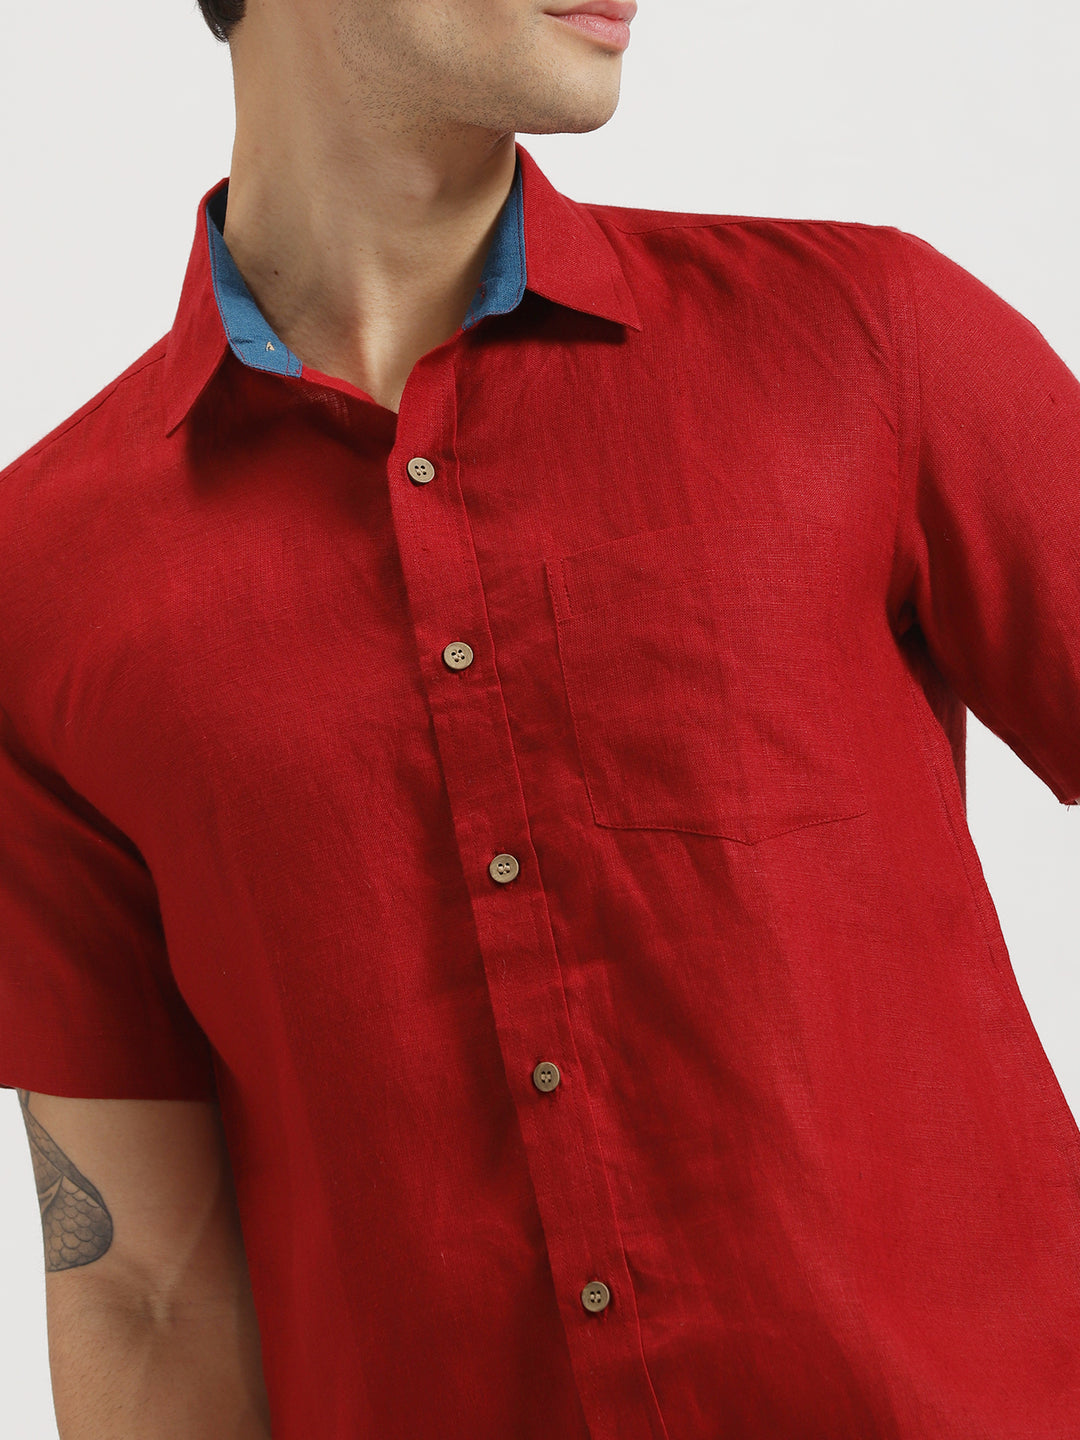 Max - Pure Linen Half Sleeve Shirt - Mud Red